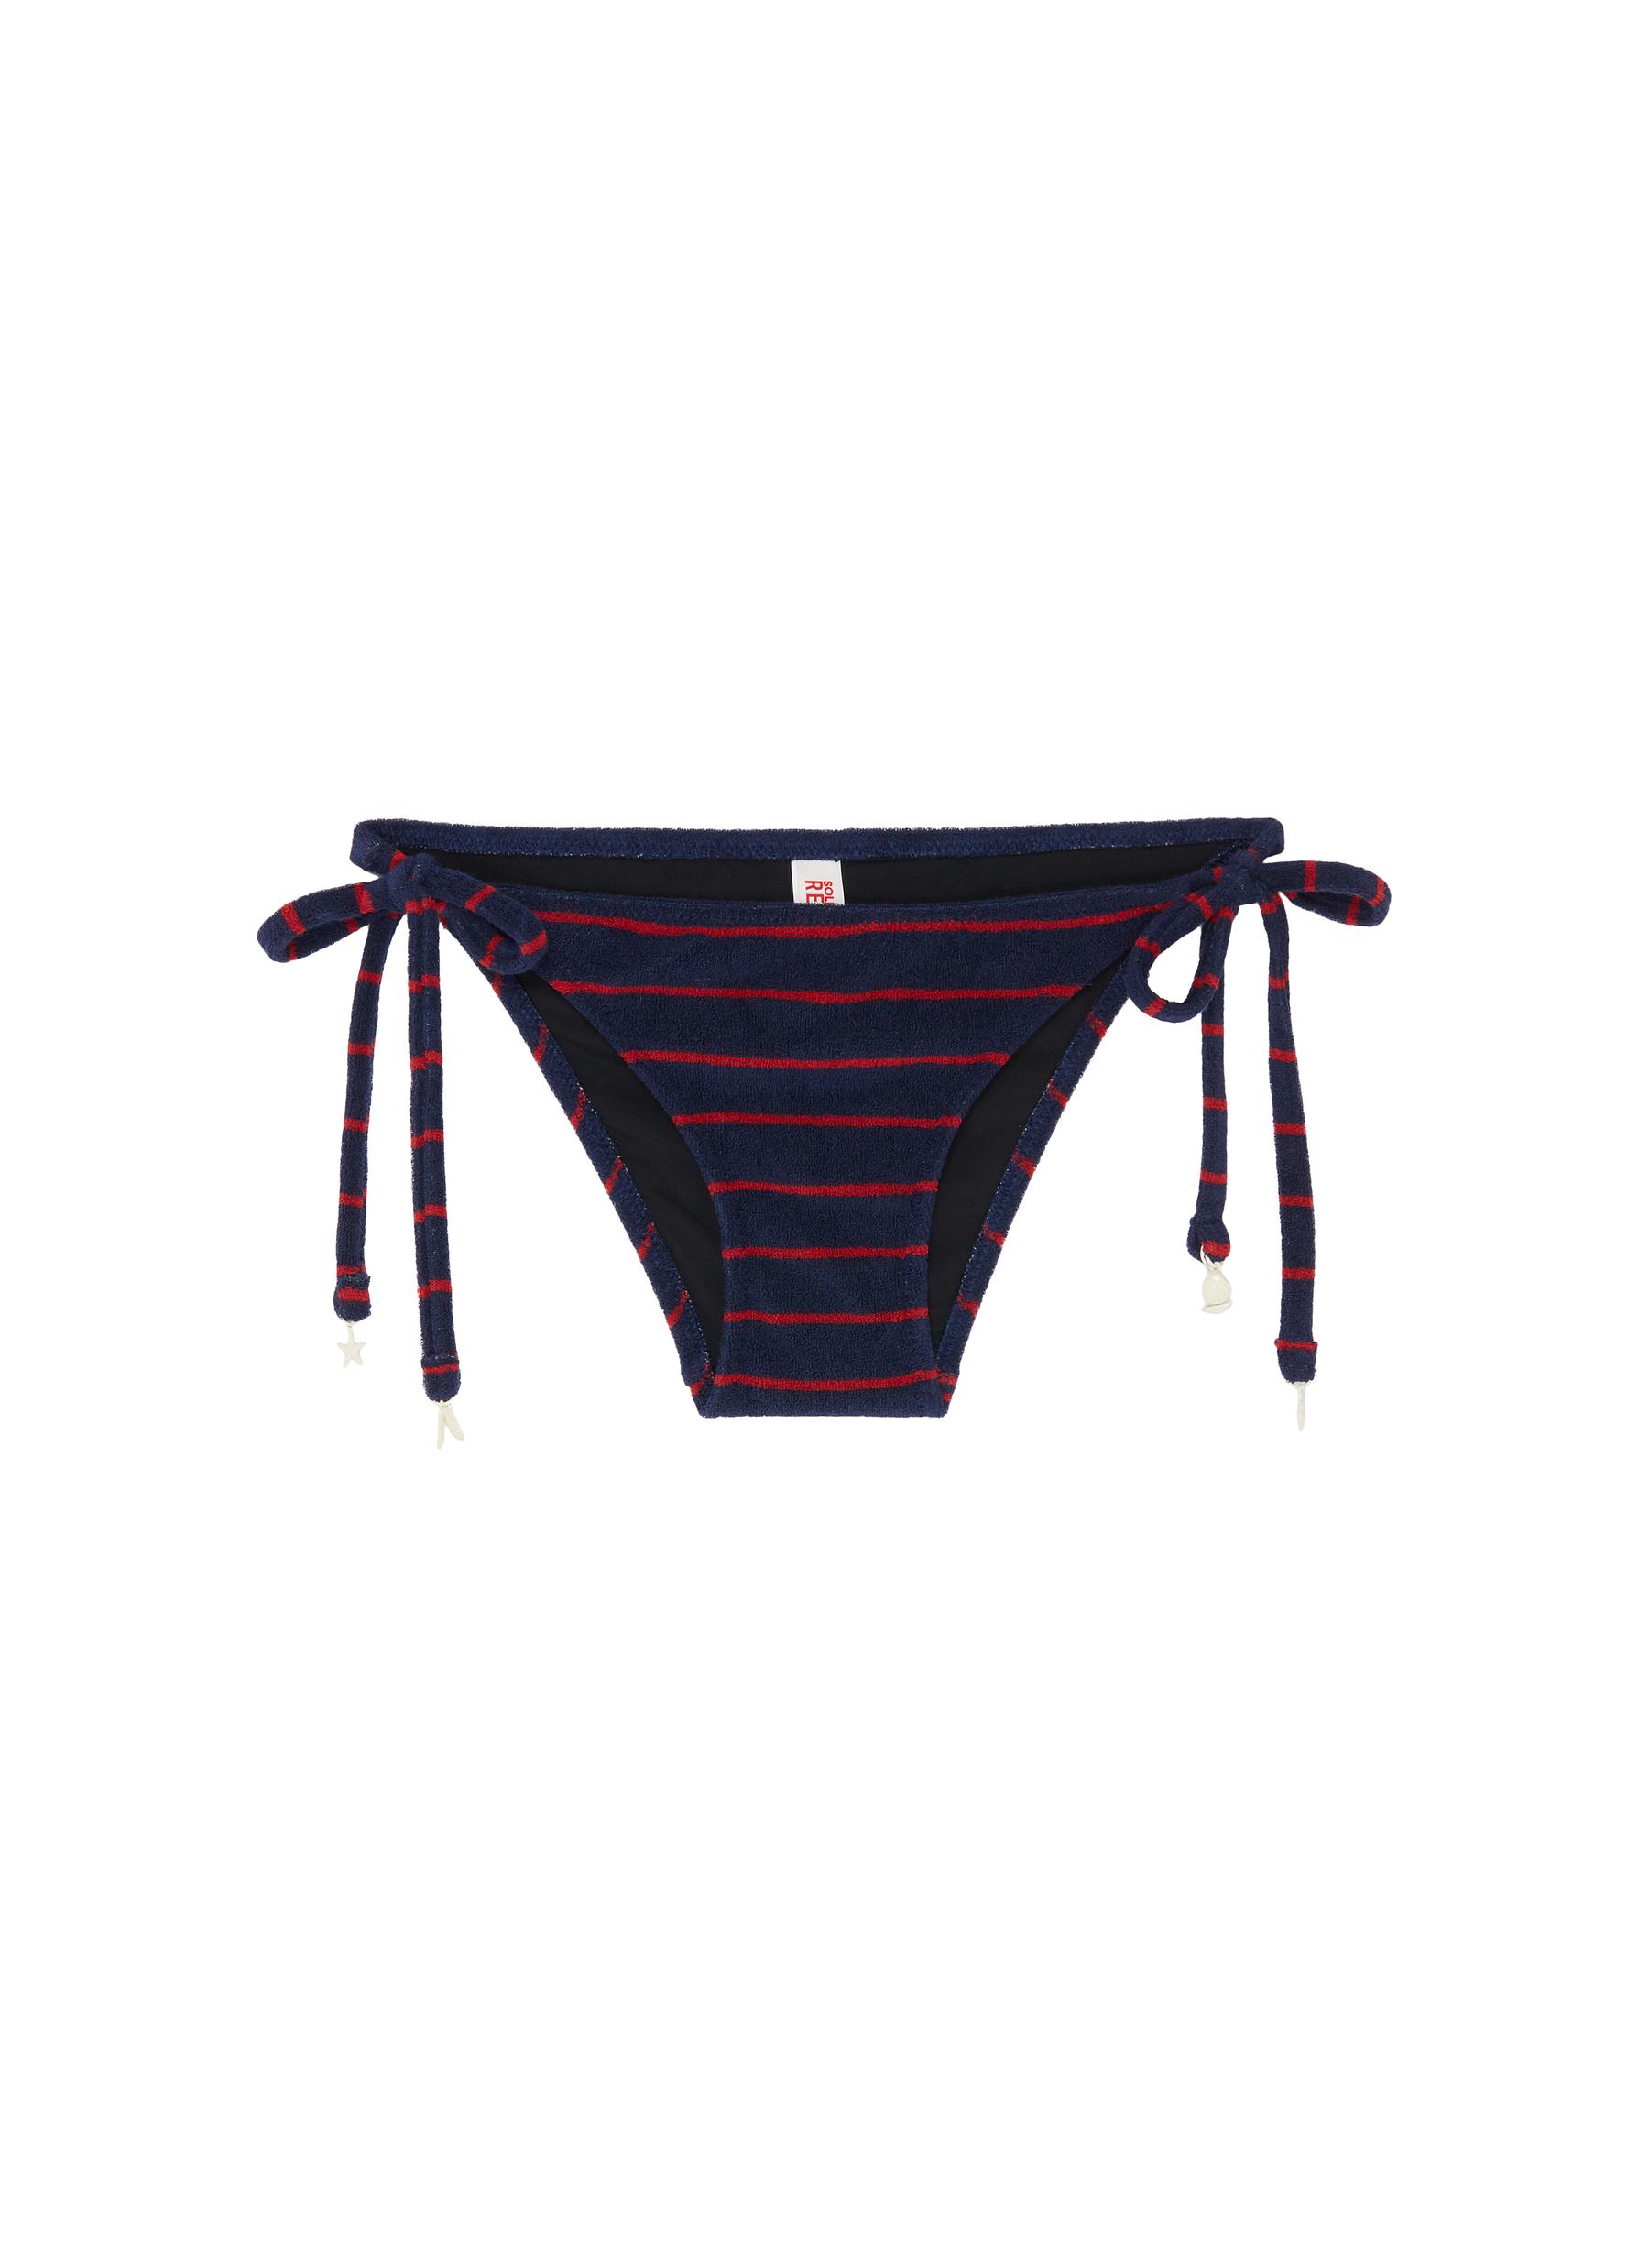 Nantucket stripe bikini bottoms by Solid & Striped